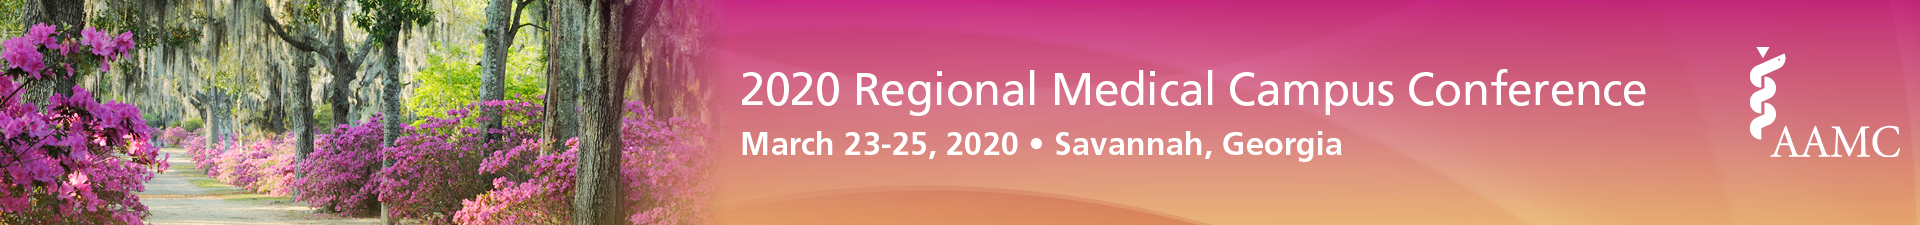 2020 Regional Medical Campus Conference Event Banner